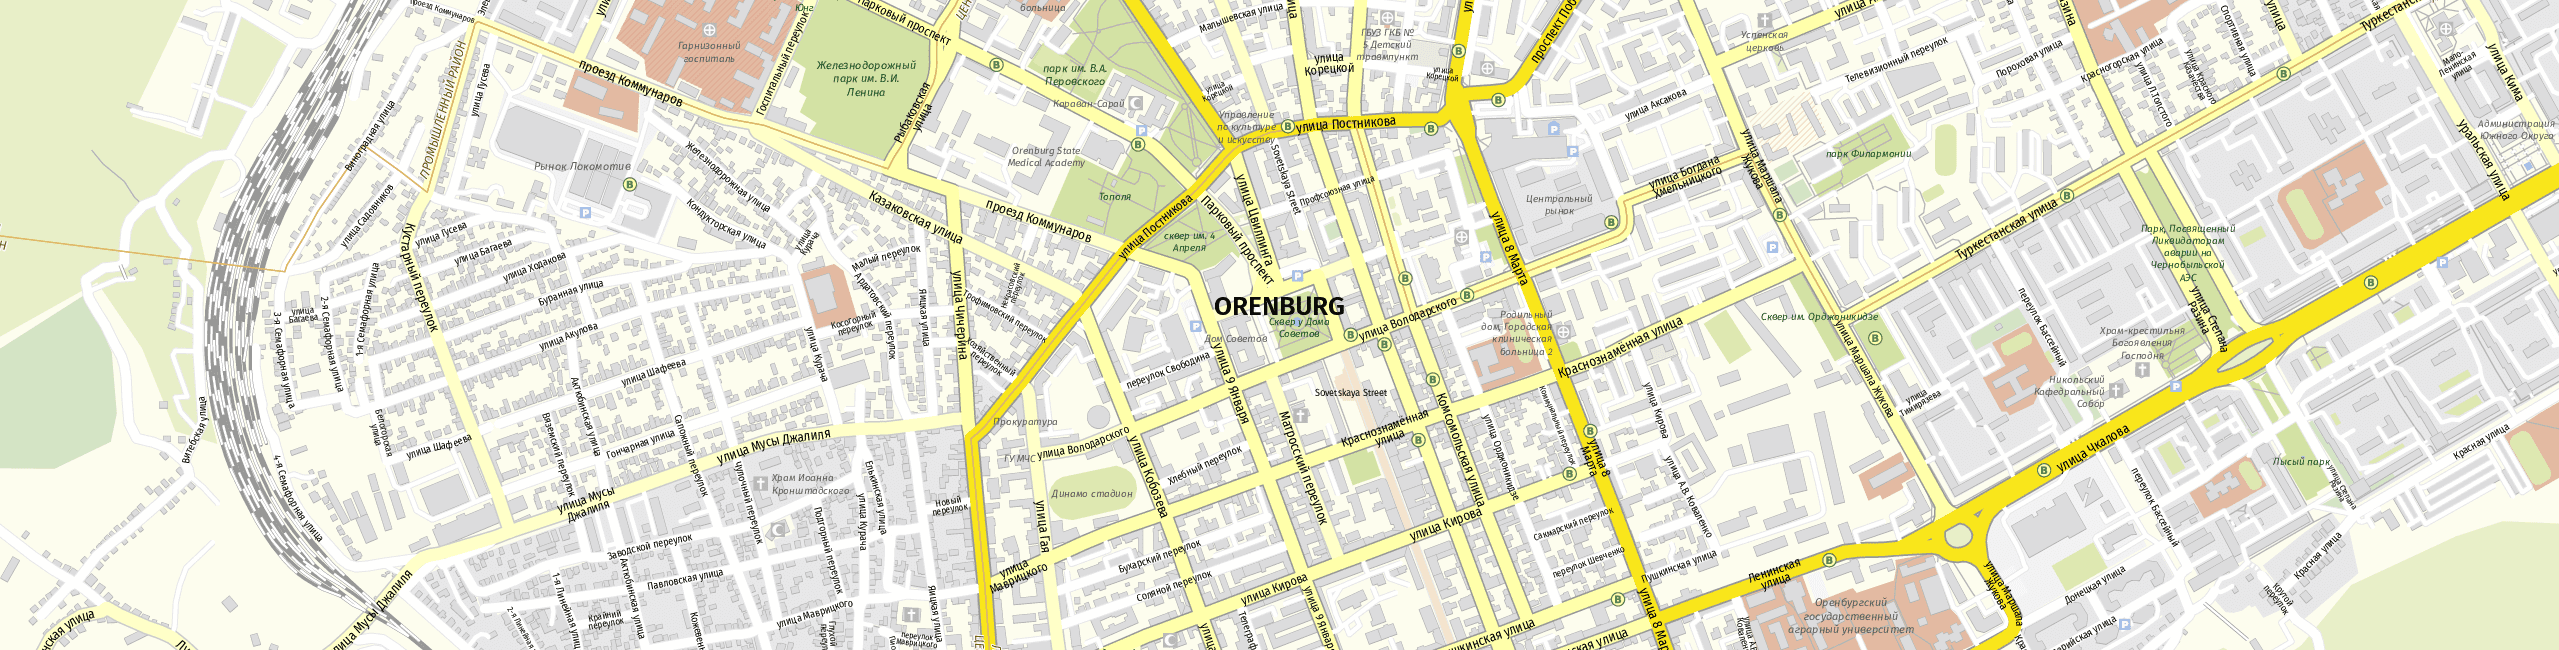 Stadtplan Orenburg zum Downloaden.